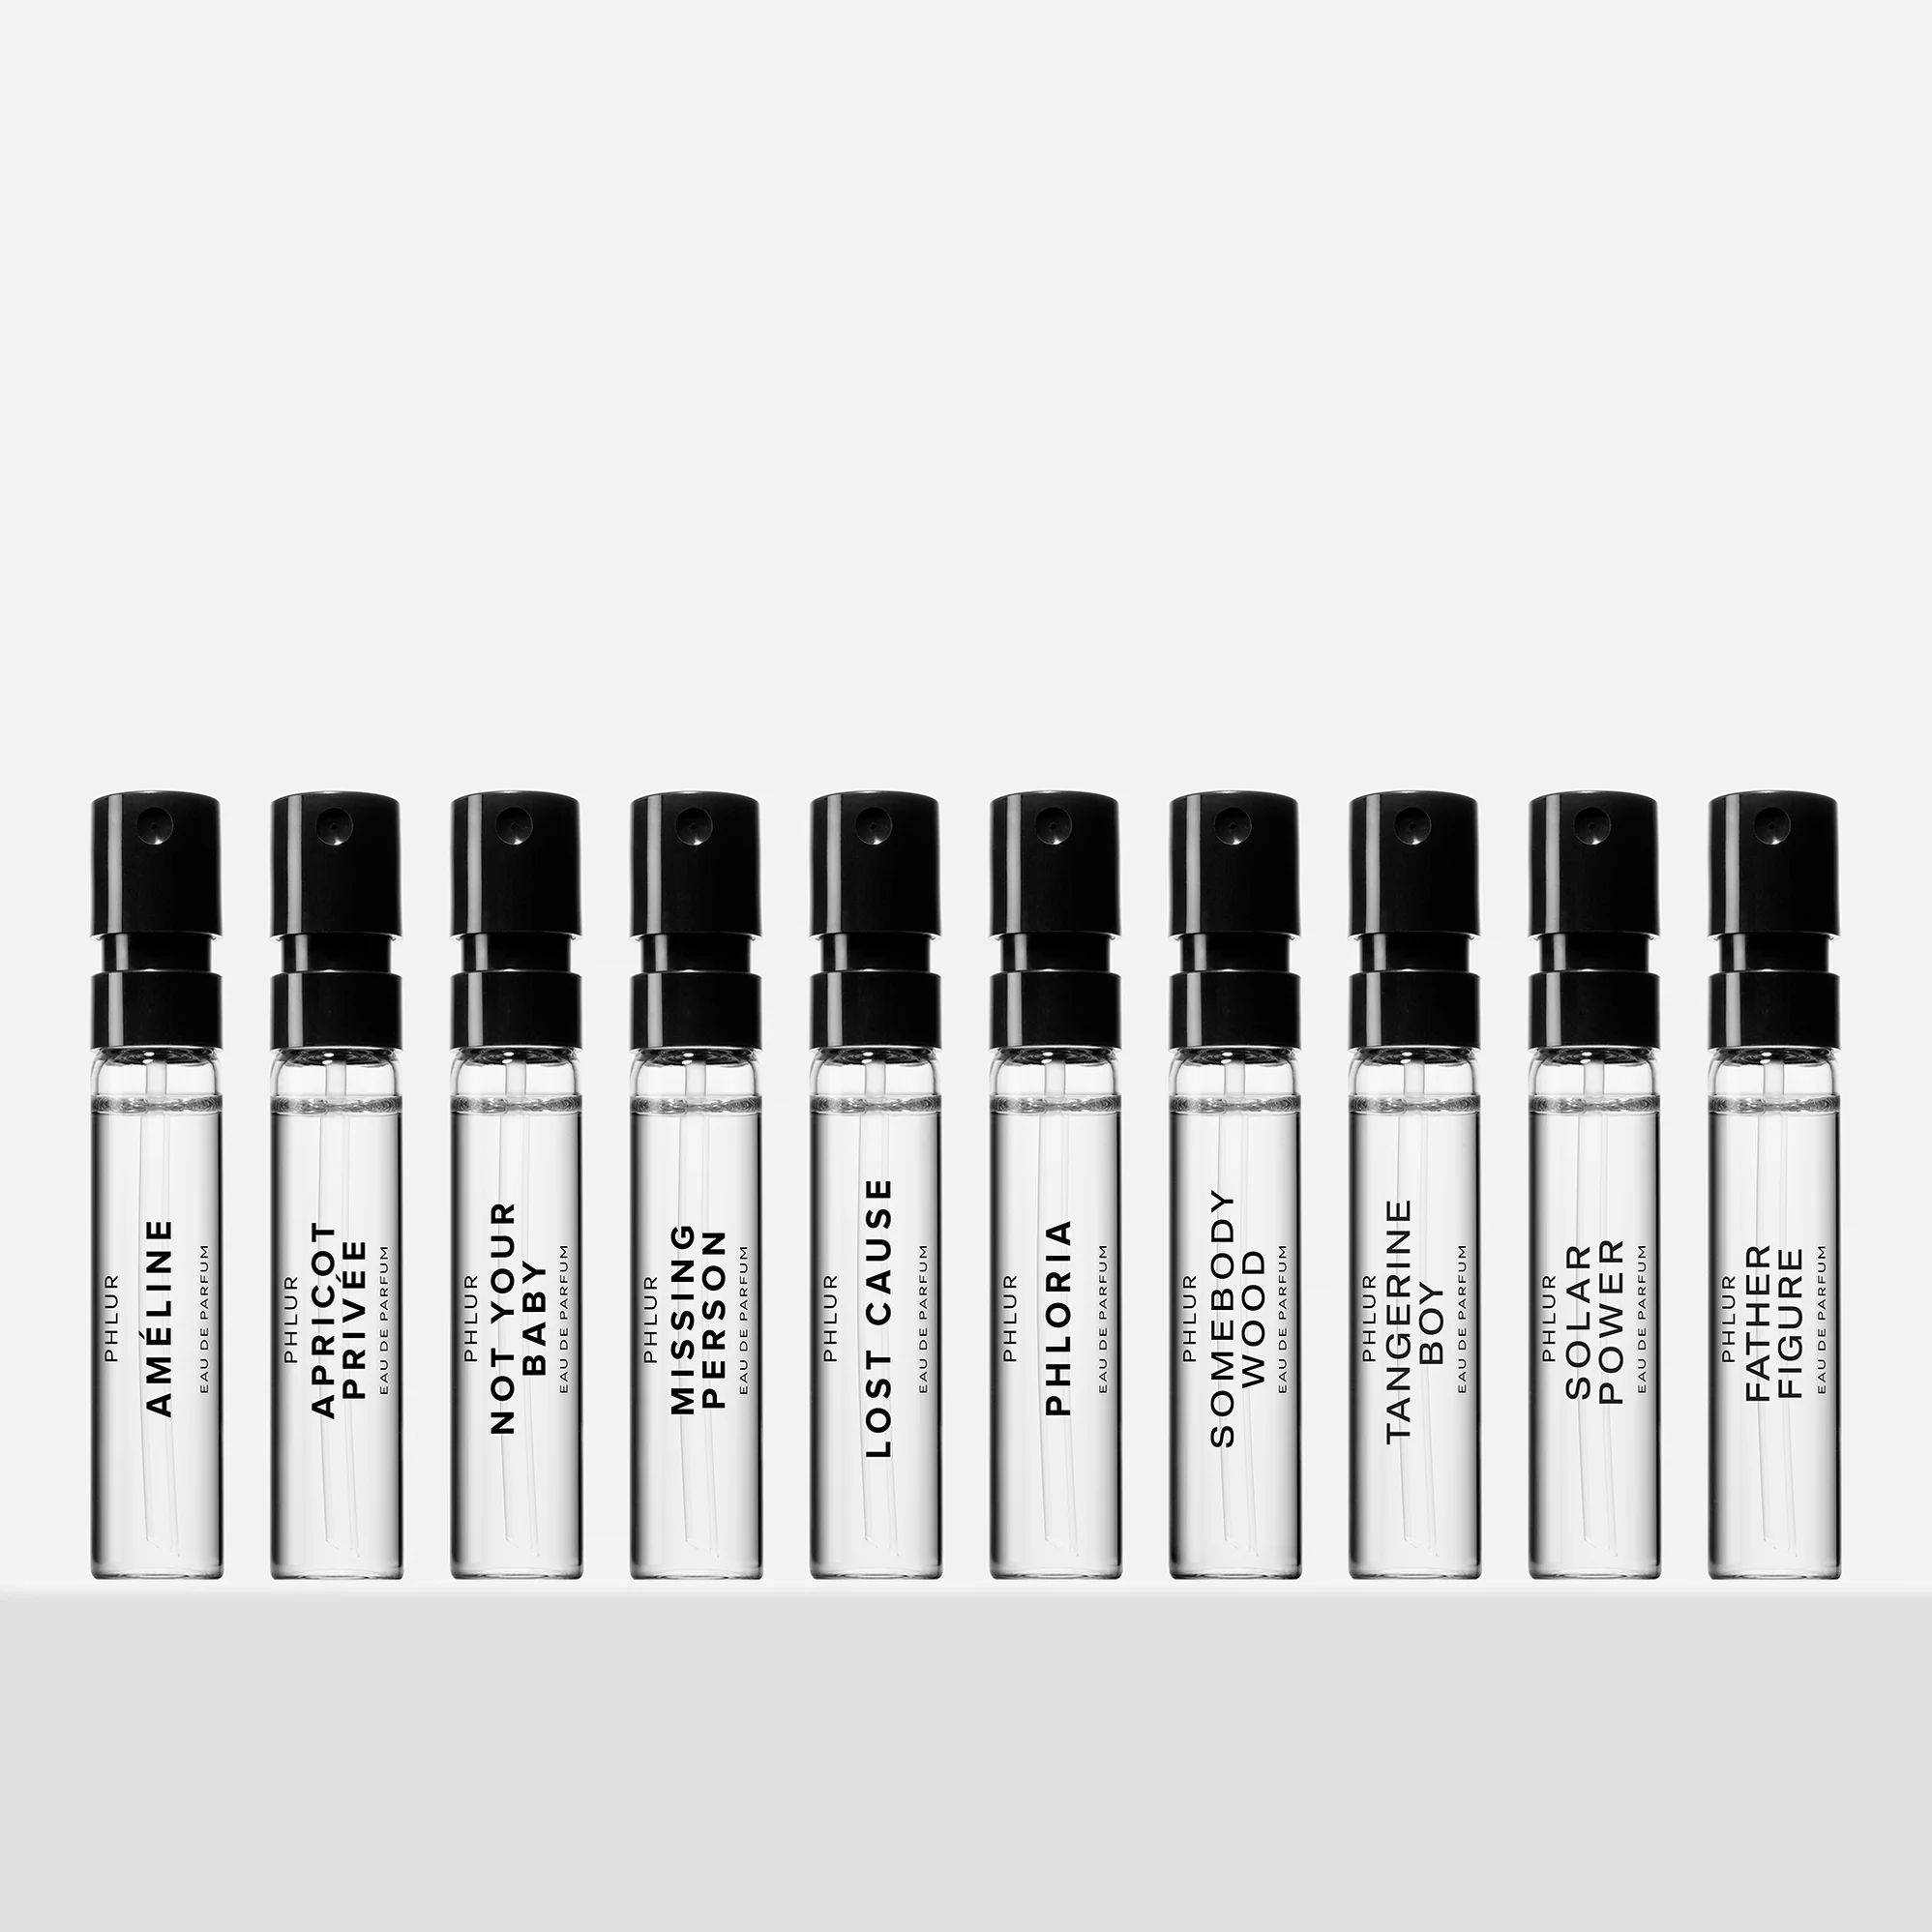 Perfume Discovery Set - 10 Piece Sample Set - Phlur | PHLUR